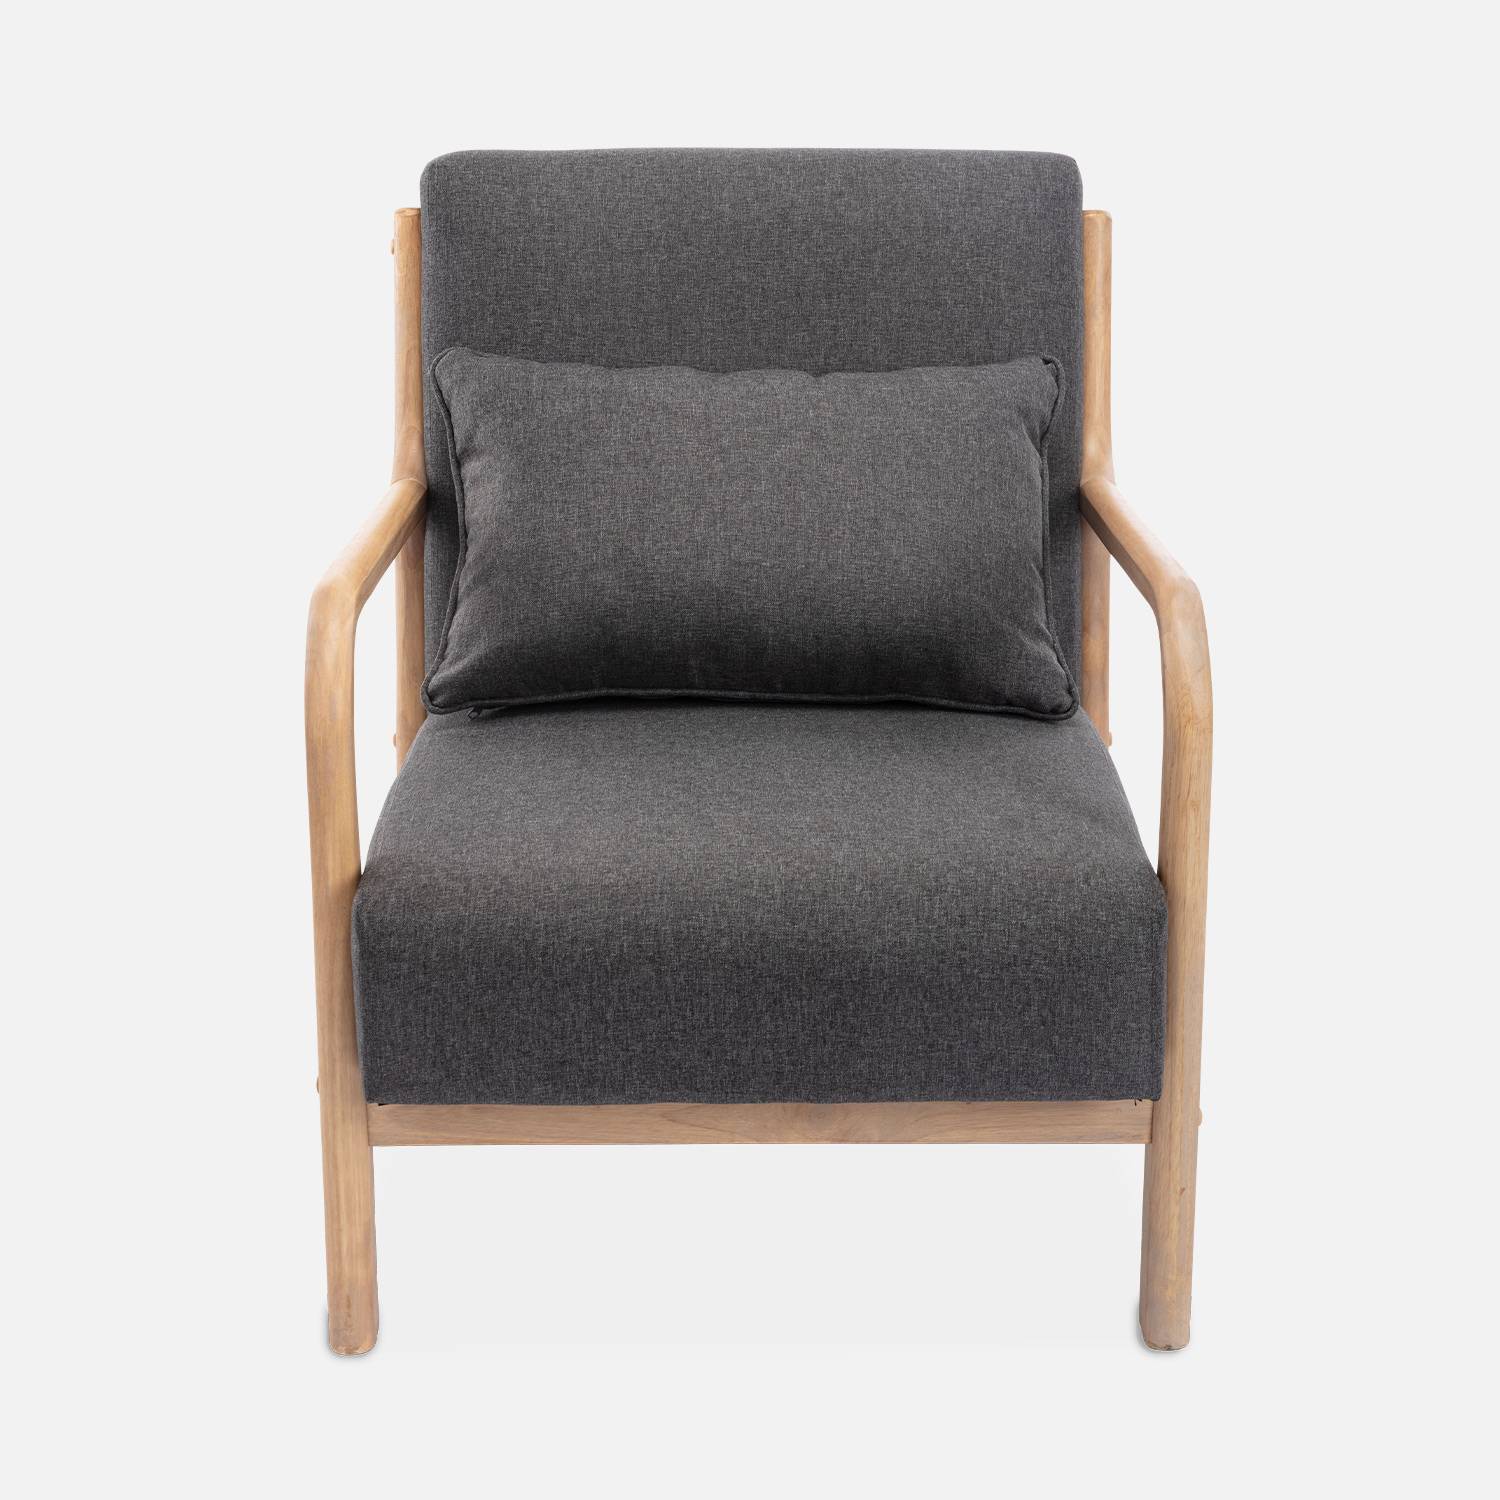 Sillón de diseño de madera y tela, 1 asiento recto fijo, patas de compás escandinavas, armazón de madera maciza, asiento cómodo, gris oscuro,sweeek,Photo5